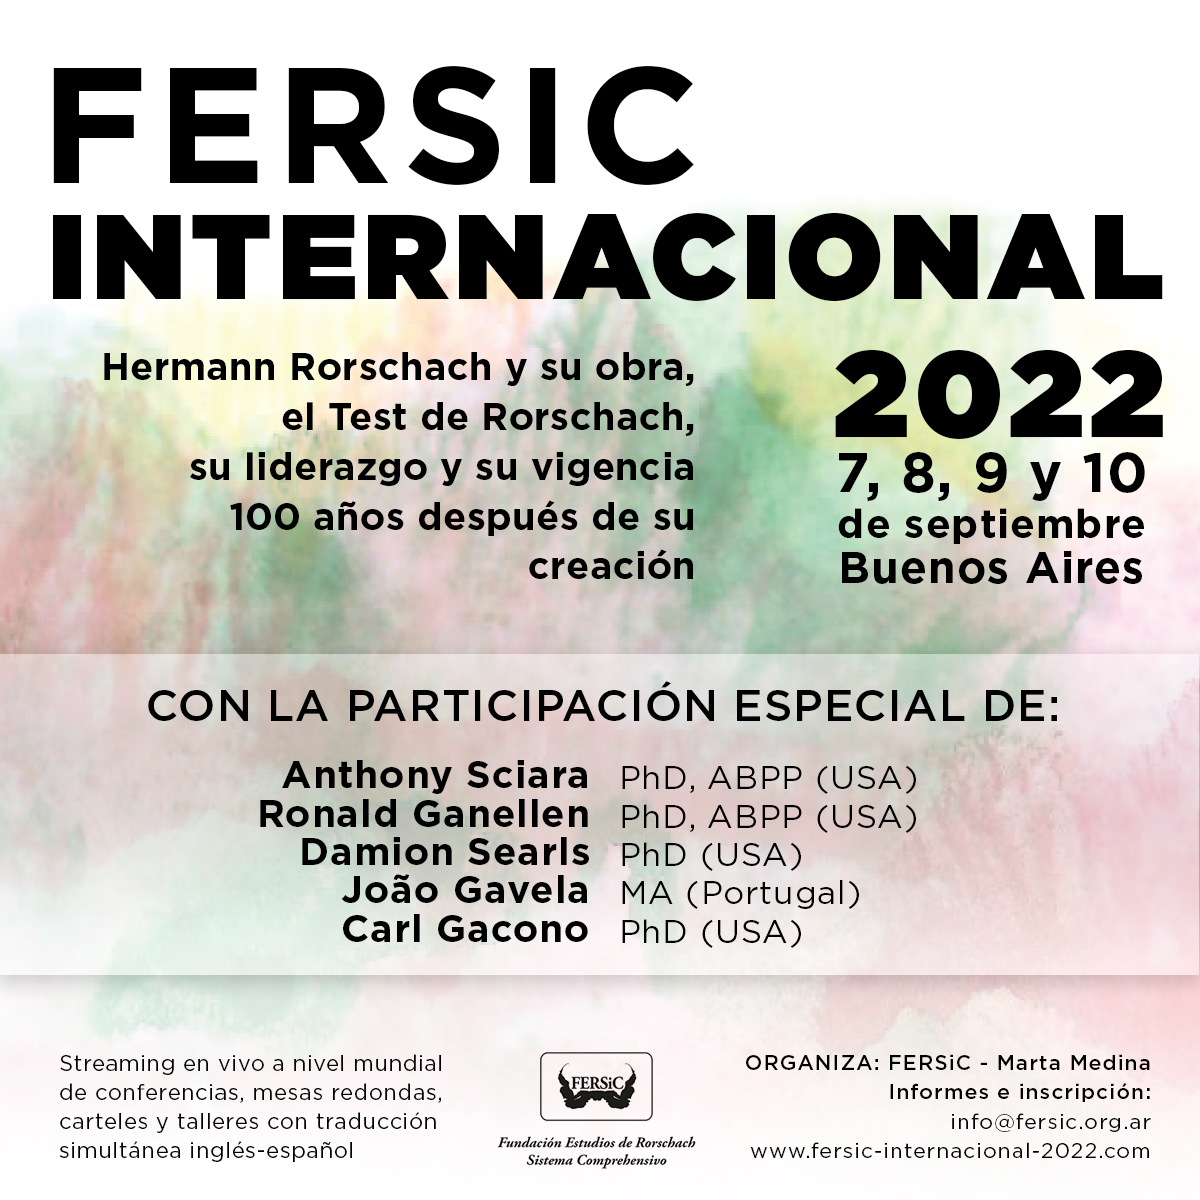 FERSIC INTERNACIONAL 2022